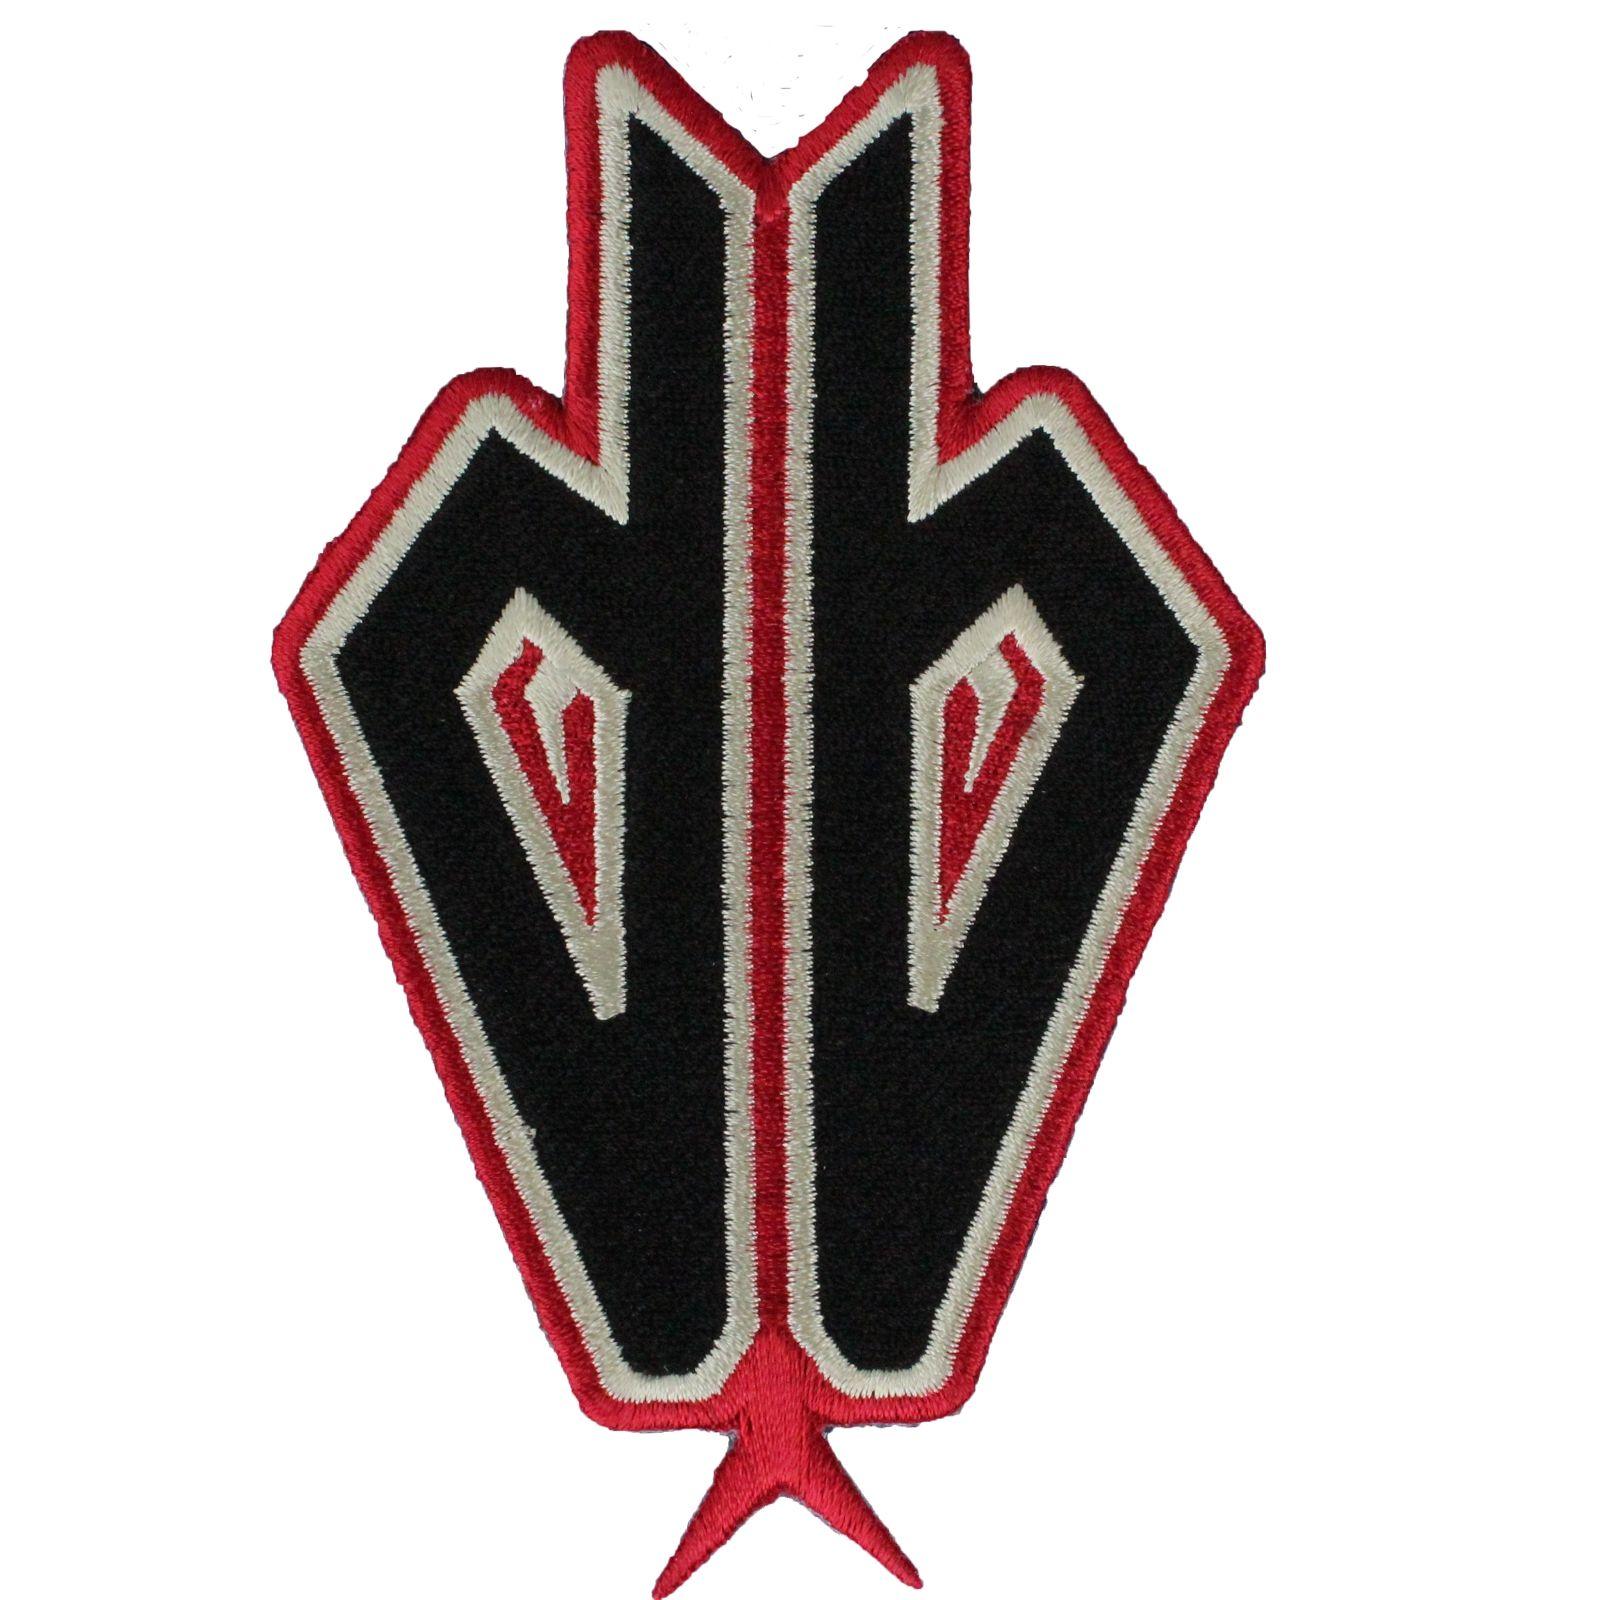 Dimondbacks Logo - Details about Arizona Diamondbacks D'backs 'DB' New Logo Sleeve Jersey  Patch MLB Emblem Black